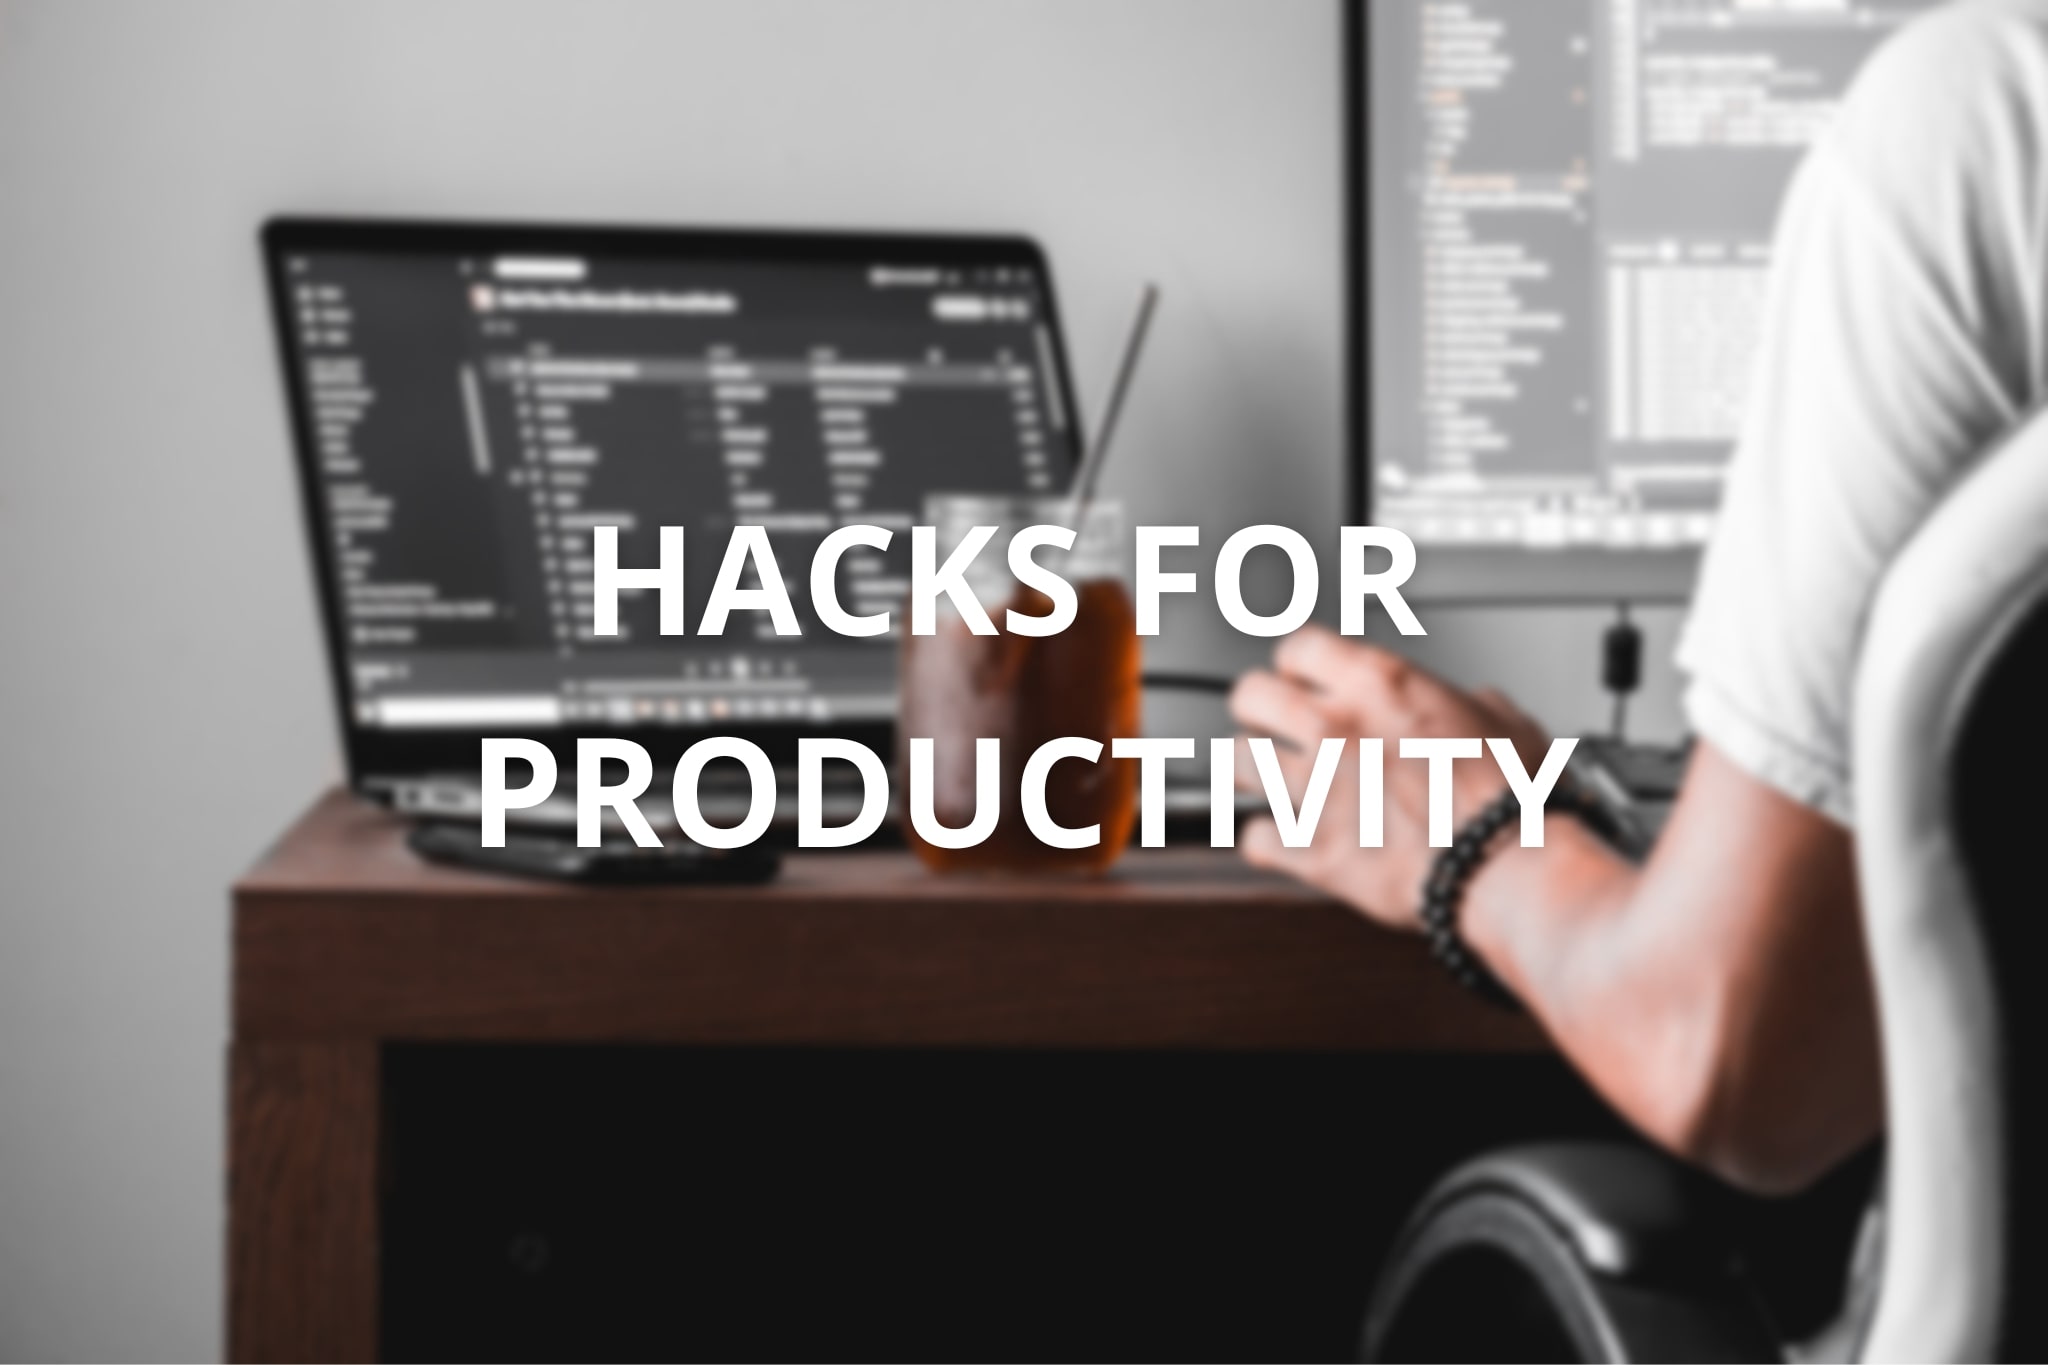 Study hacks for productivity